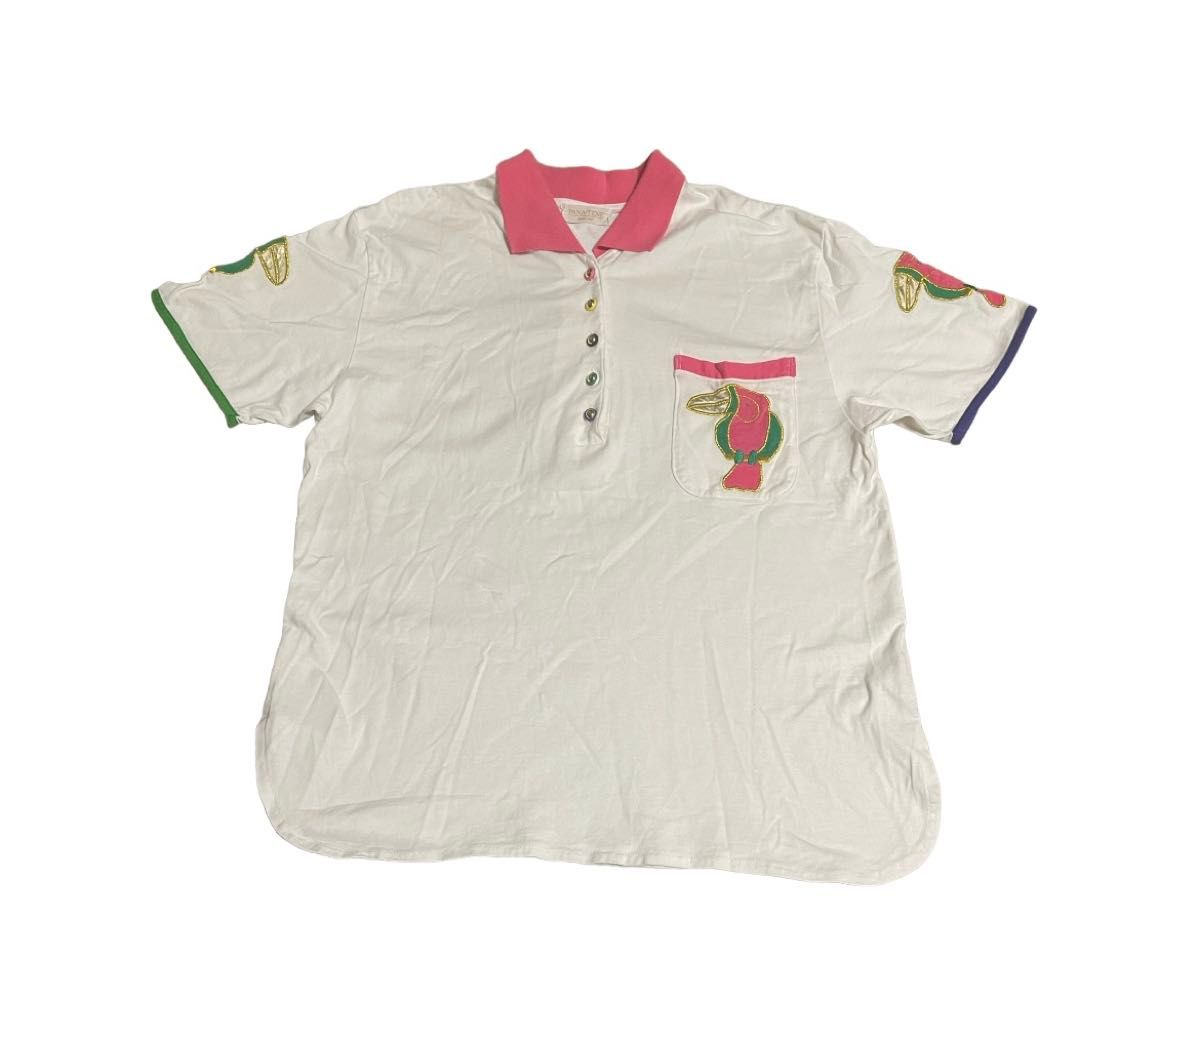 PANA・TENE レディーストップス 半袖Tシャツ M L 綿100% 襟付き ポロシャツ 半袖 トップス